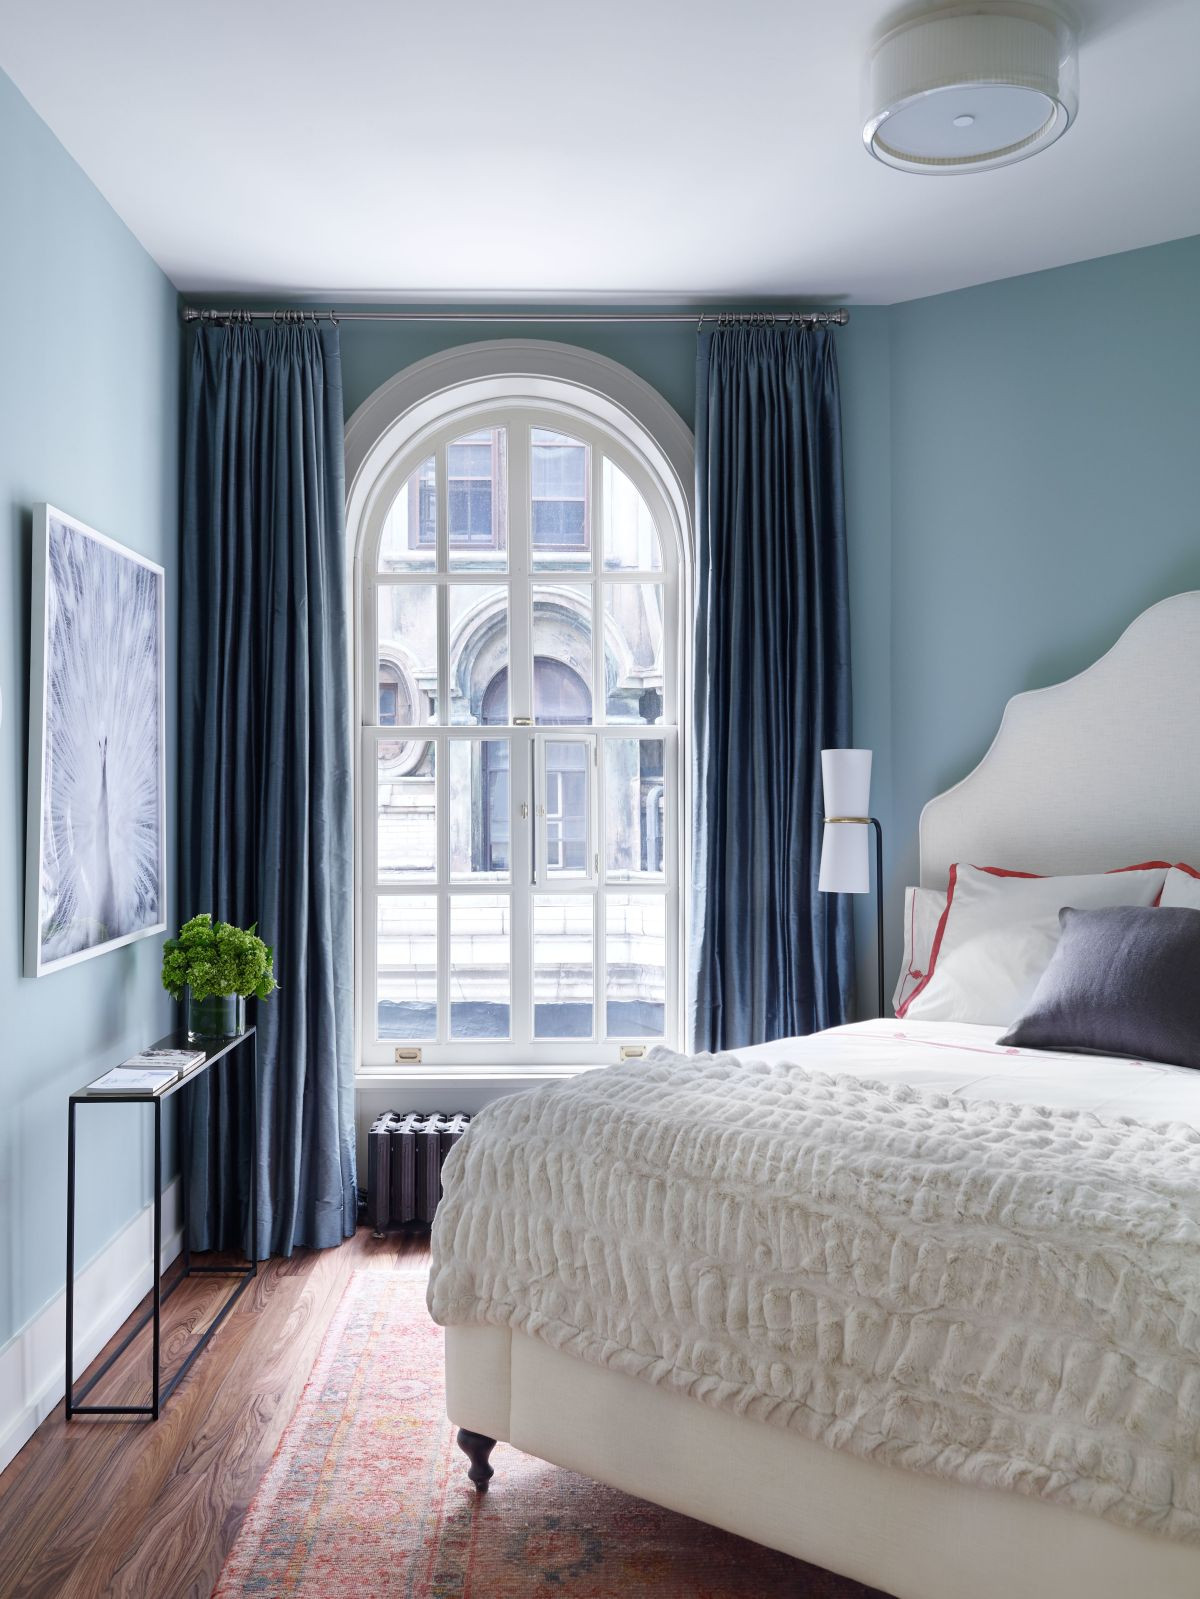 Popular Bedroom Paint Colours
 The Four Best Paint Colors For Bedrooms